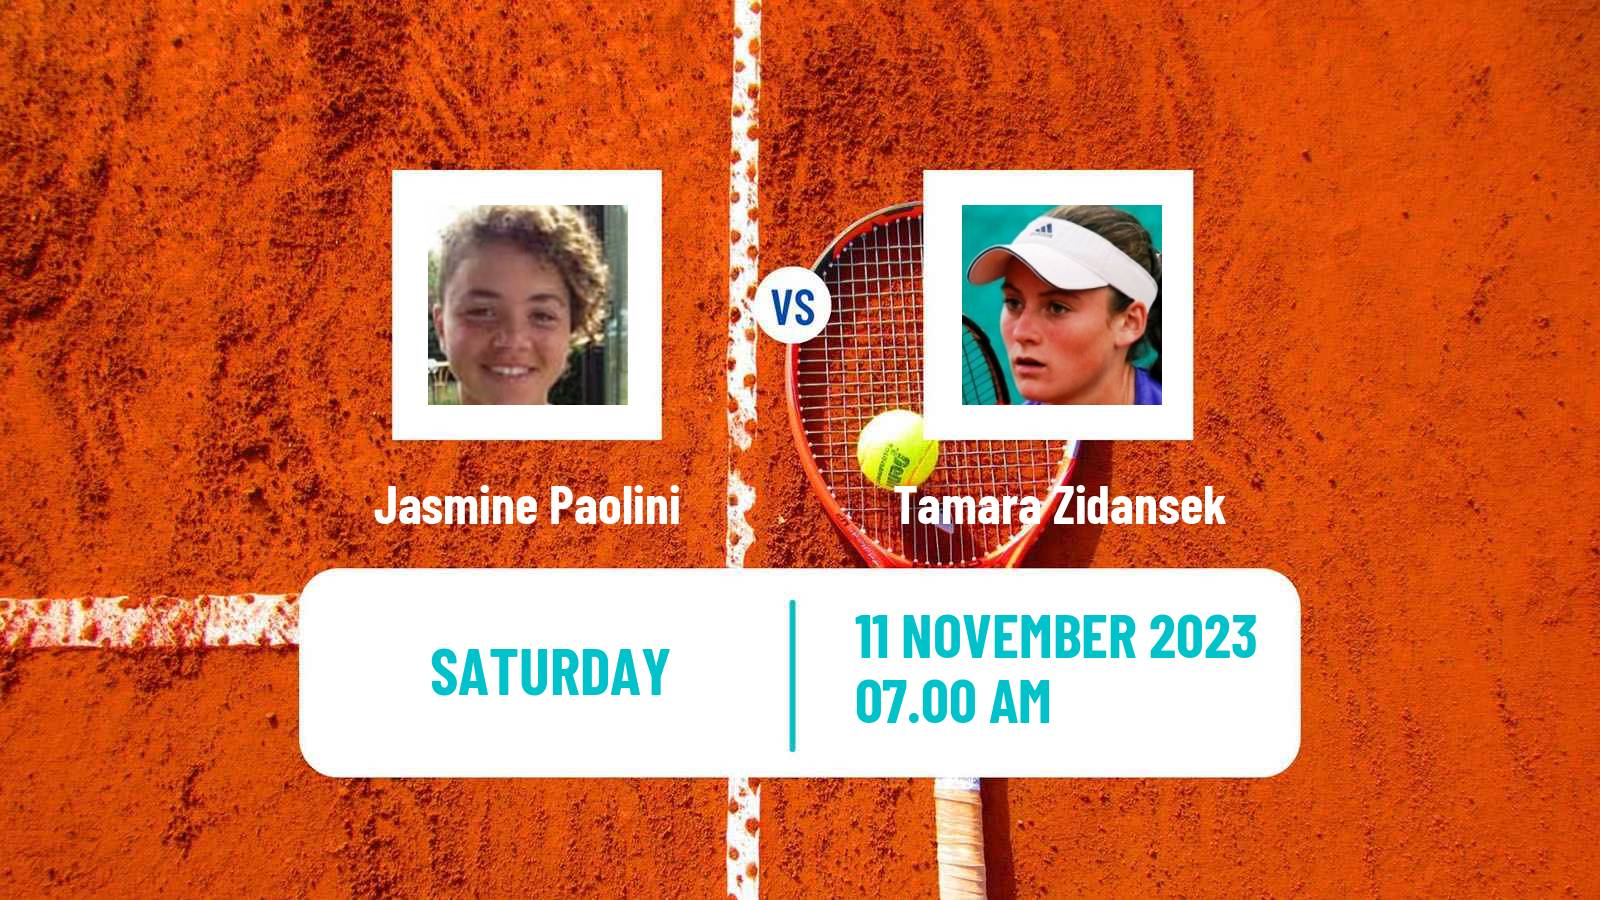 Tennis WTA Billie Jean King Cup World Group Jasmine Paolini - Tamara Zidansek